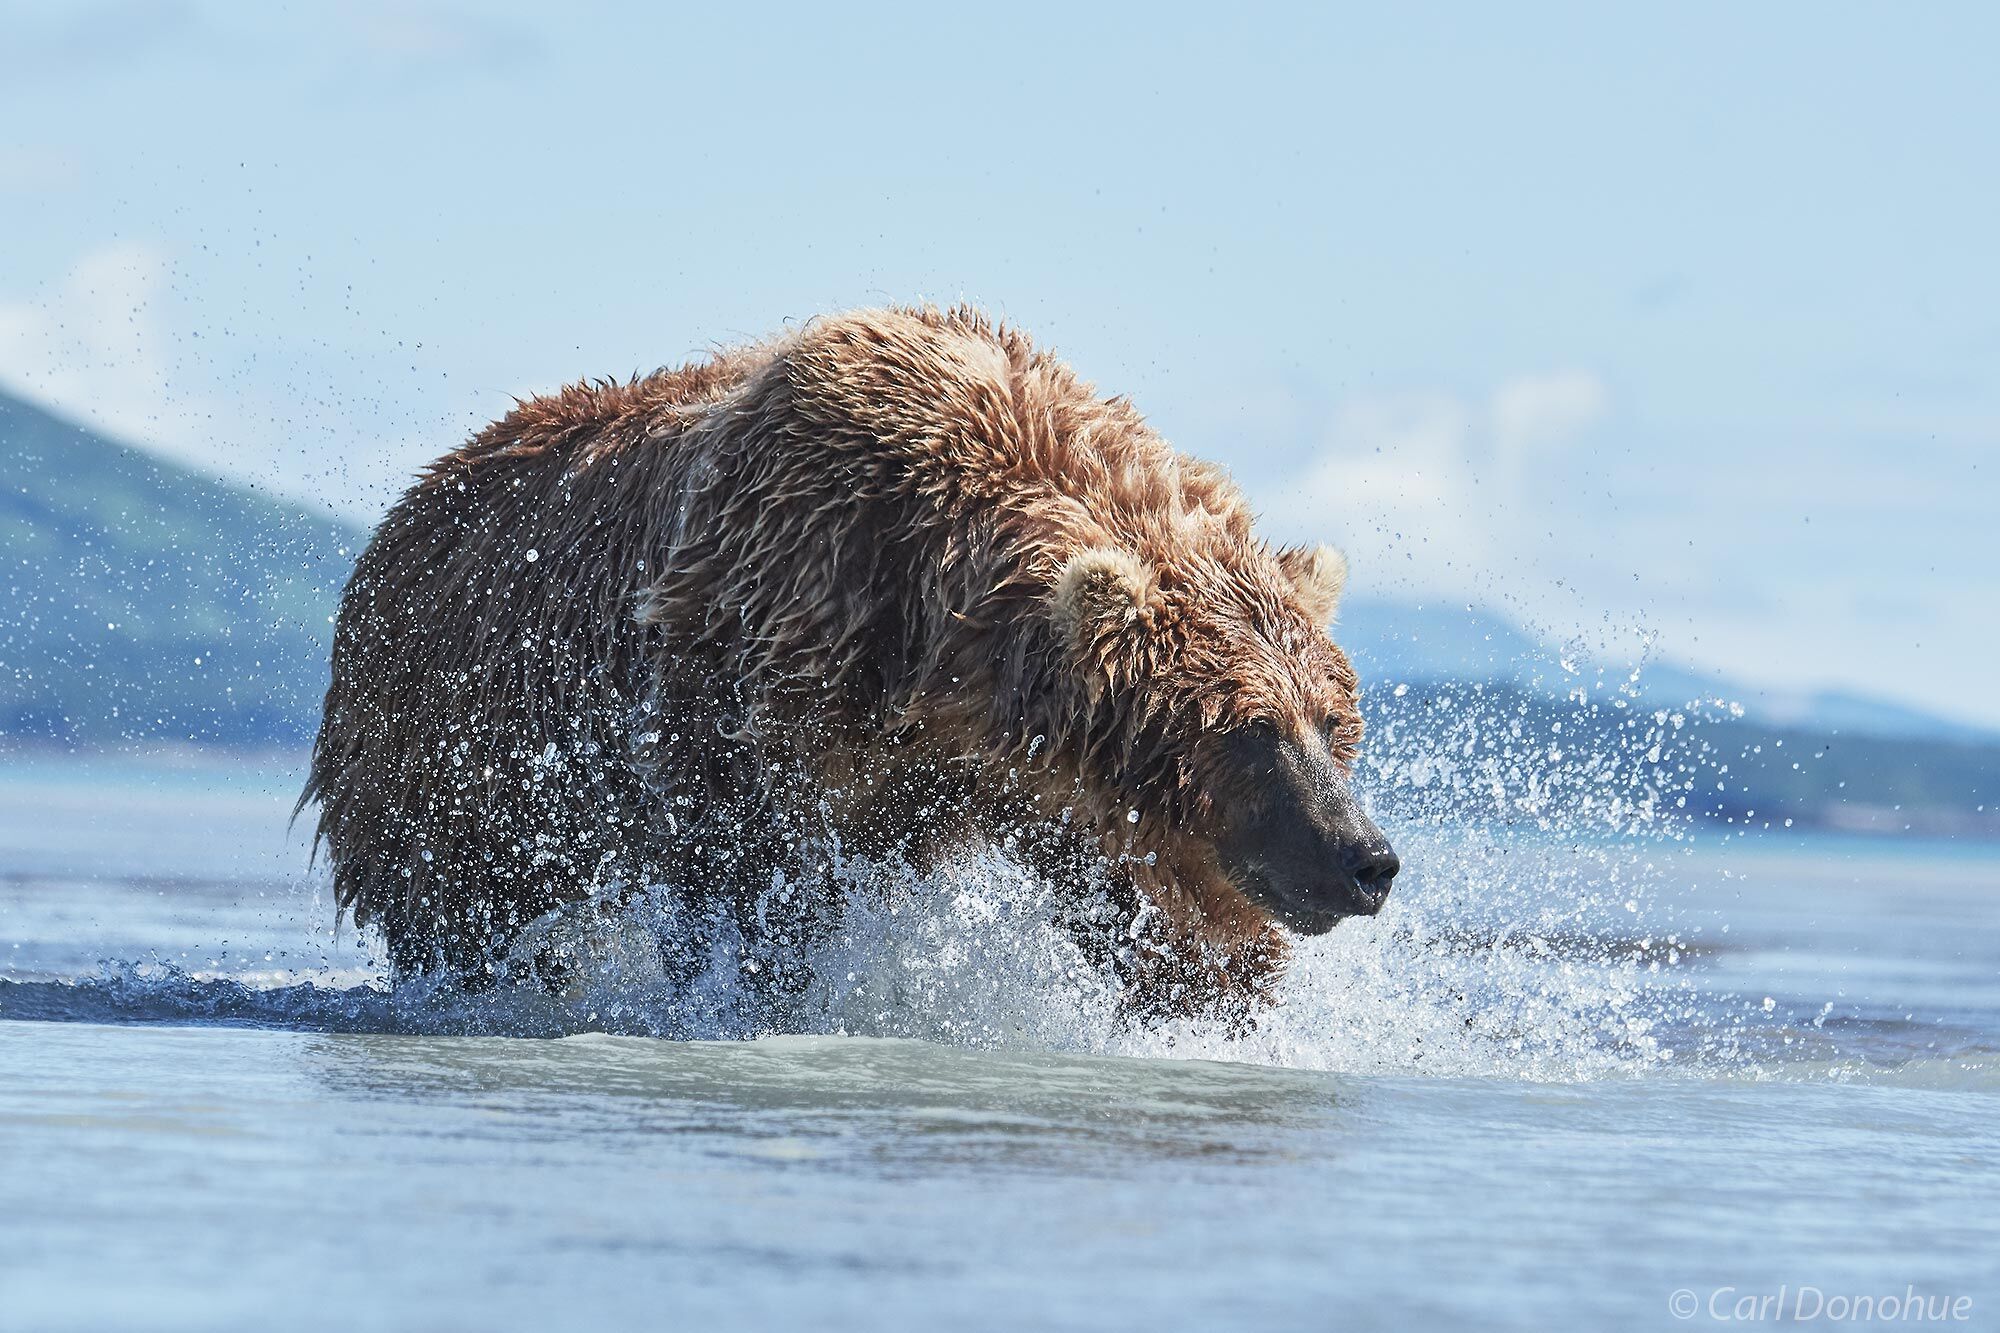 Adult female brown bear stalking salmon in the shallows of Hallo Bay, Katmai National Park and Preserve, Alaska.